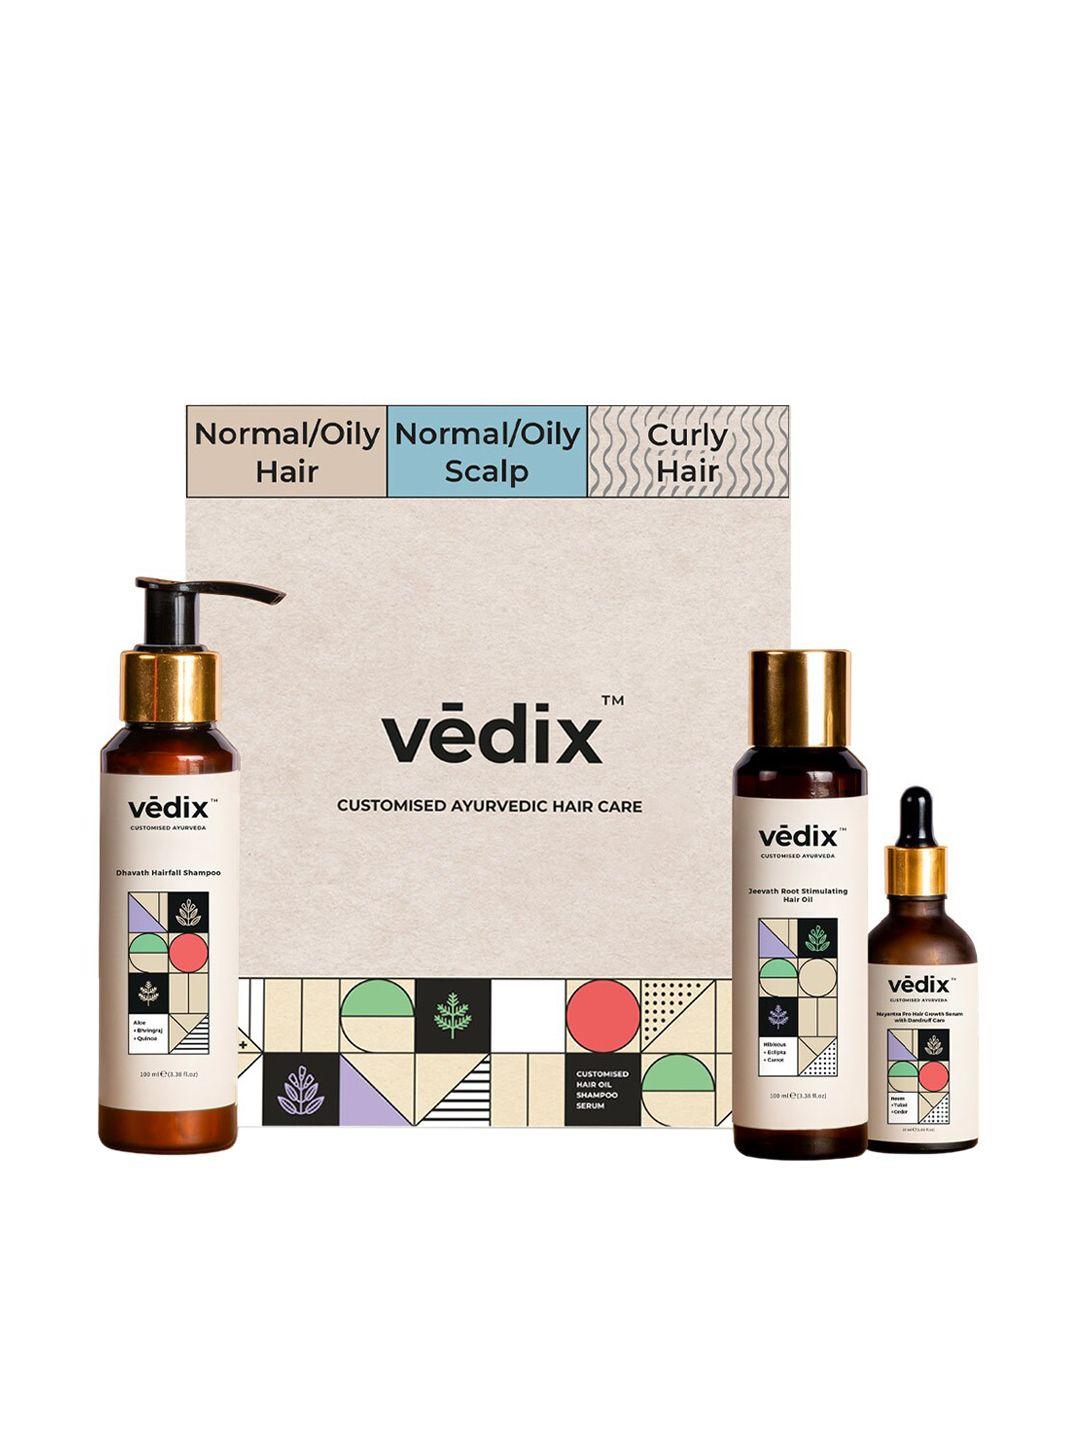 vedix customized hair fall control regimen for dry hair - normal-oily scalp & curly hair